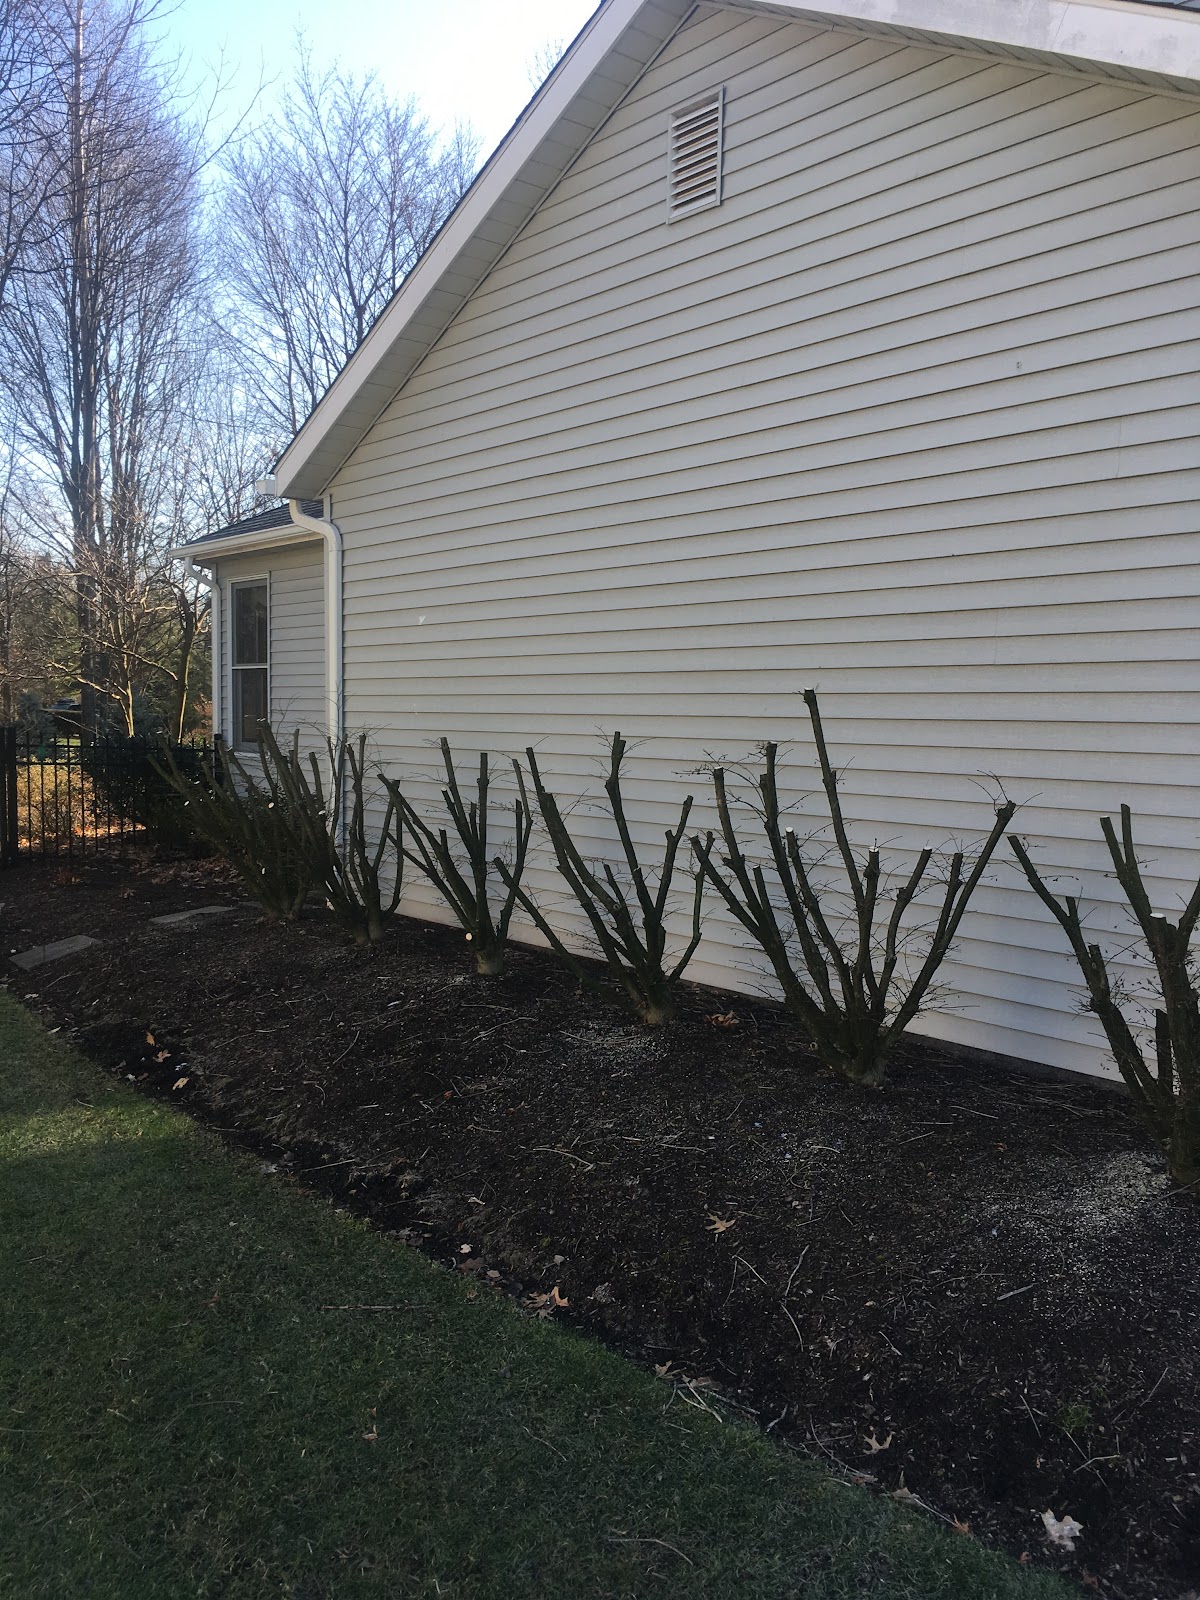 Pruning-shrubs-around-home